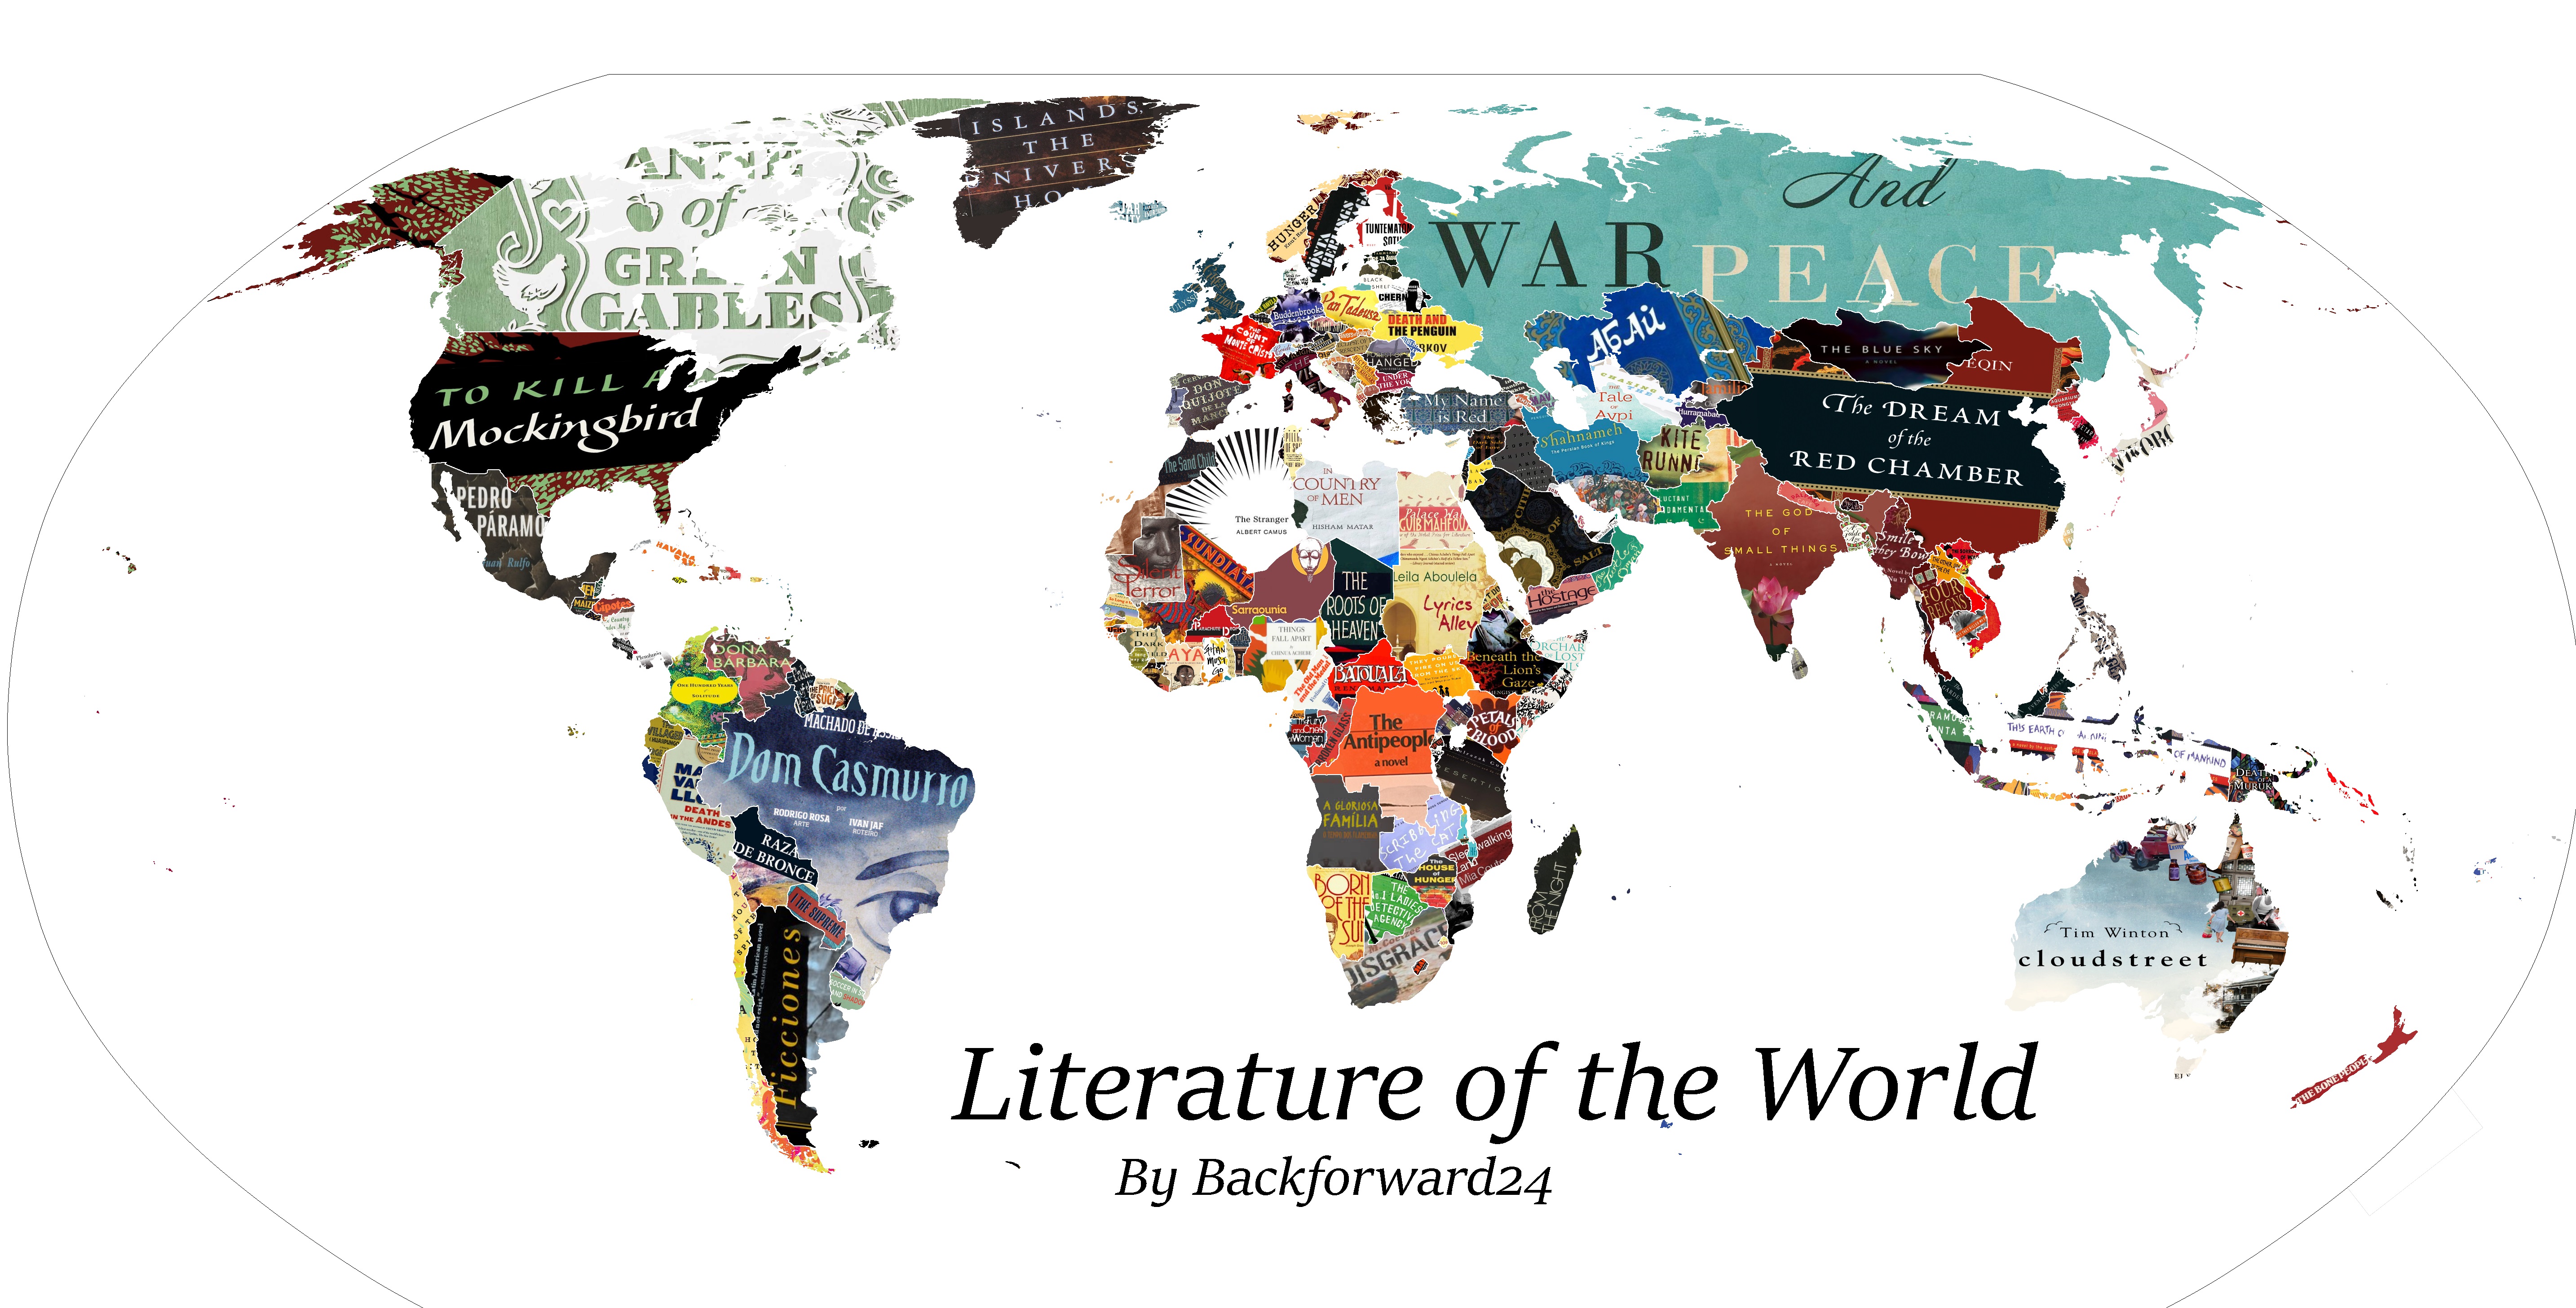 С миру по книге: опубликована литературная карта Земли - фото 